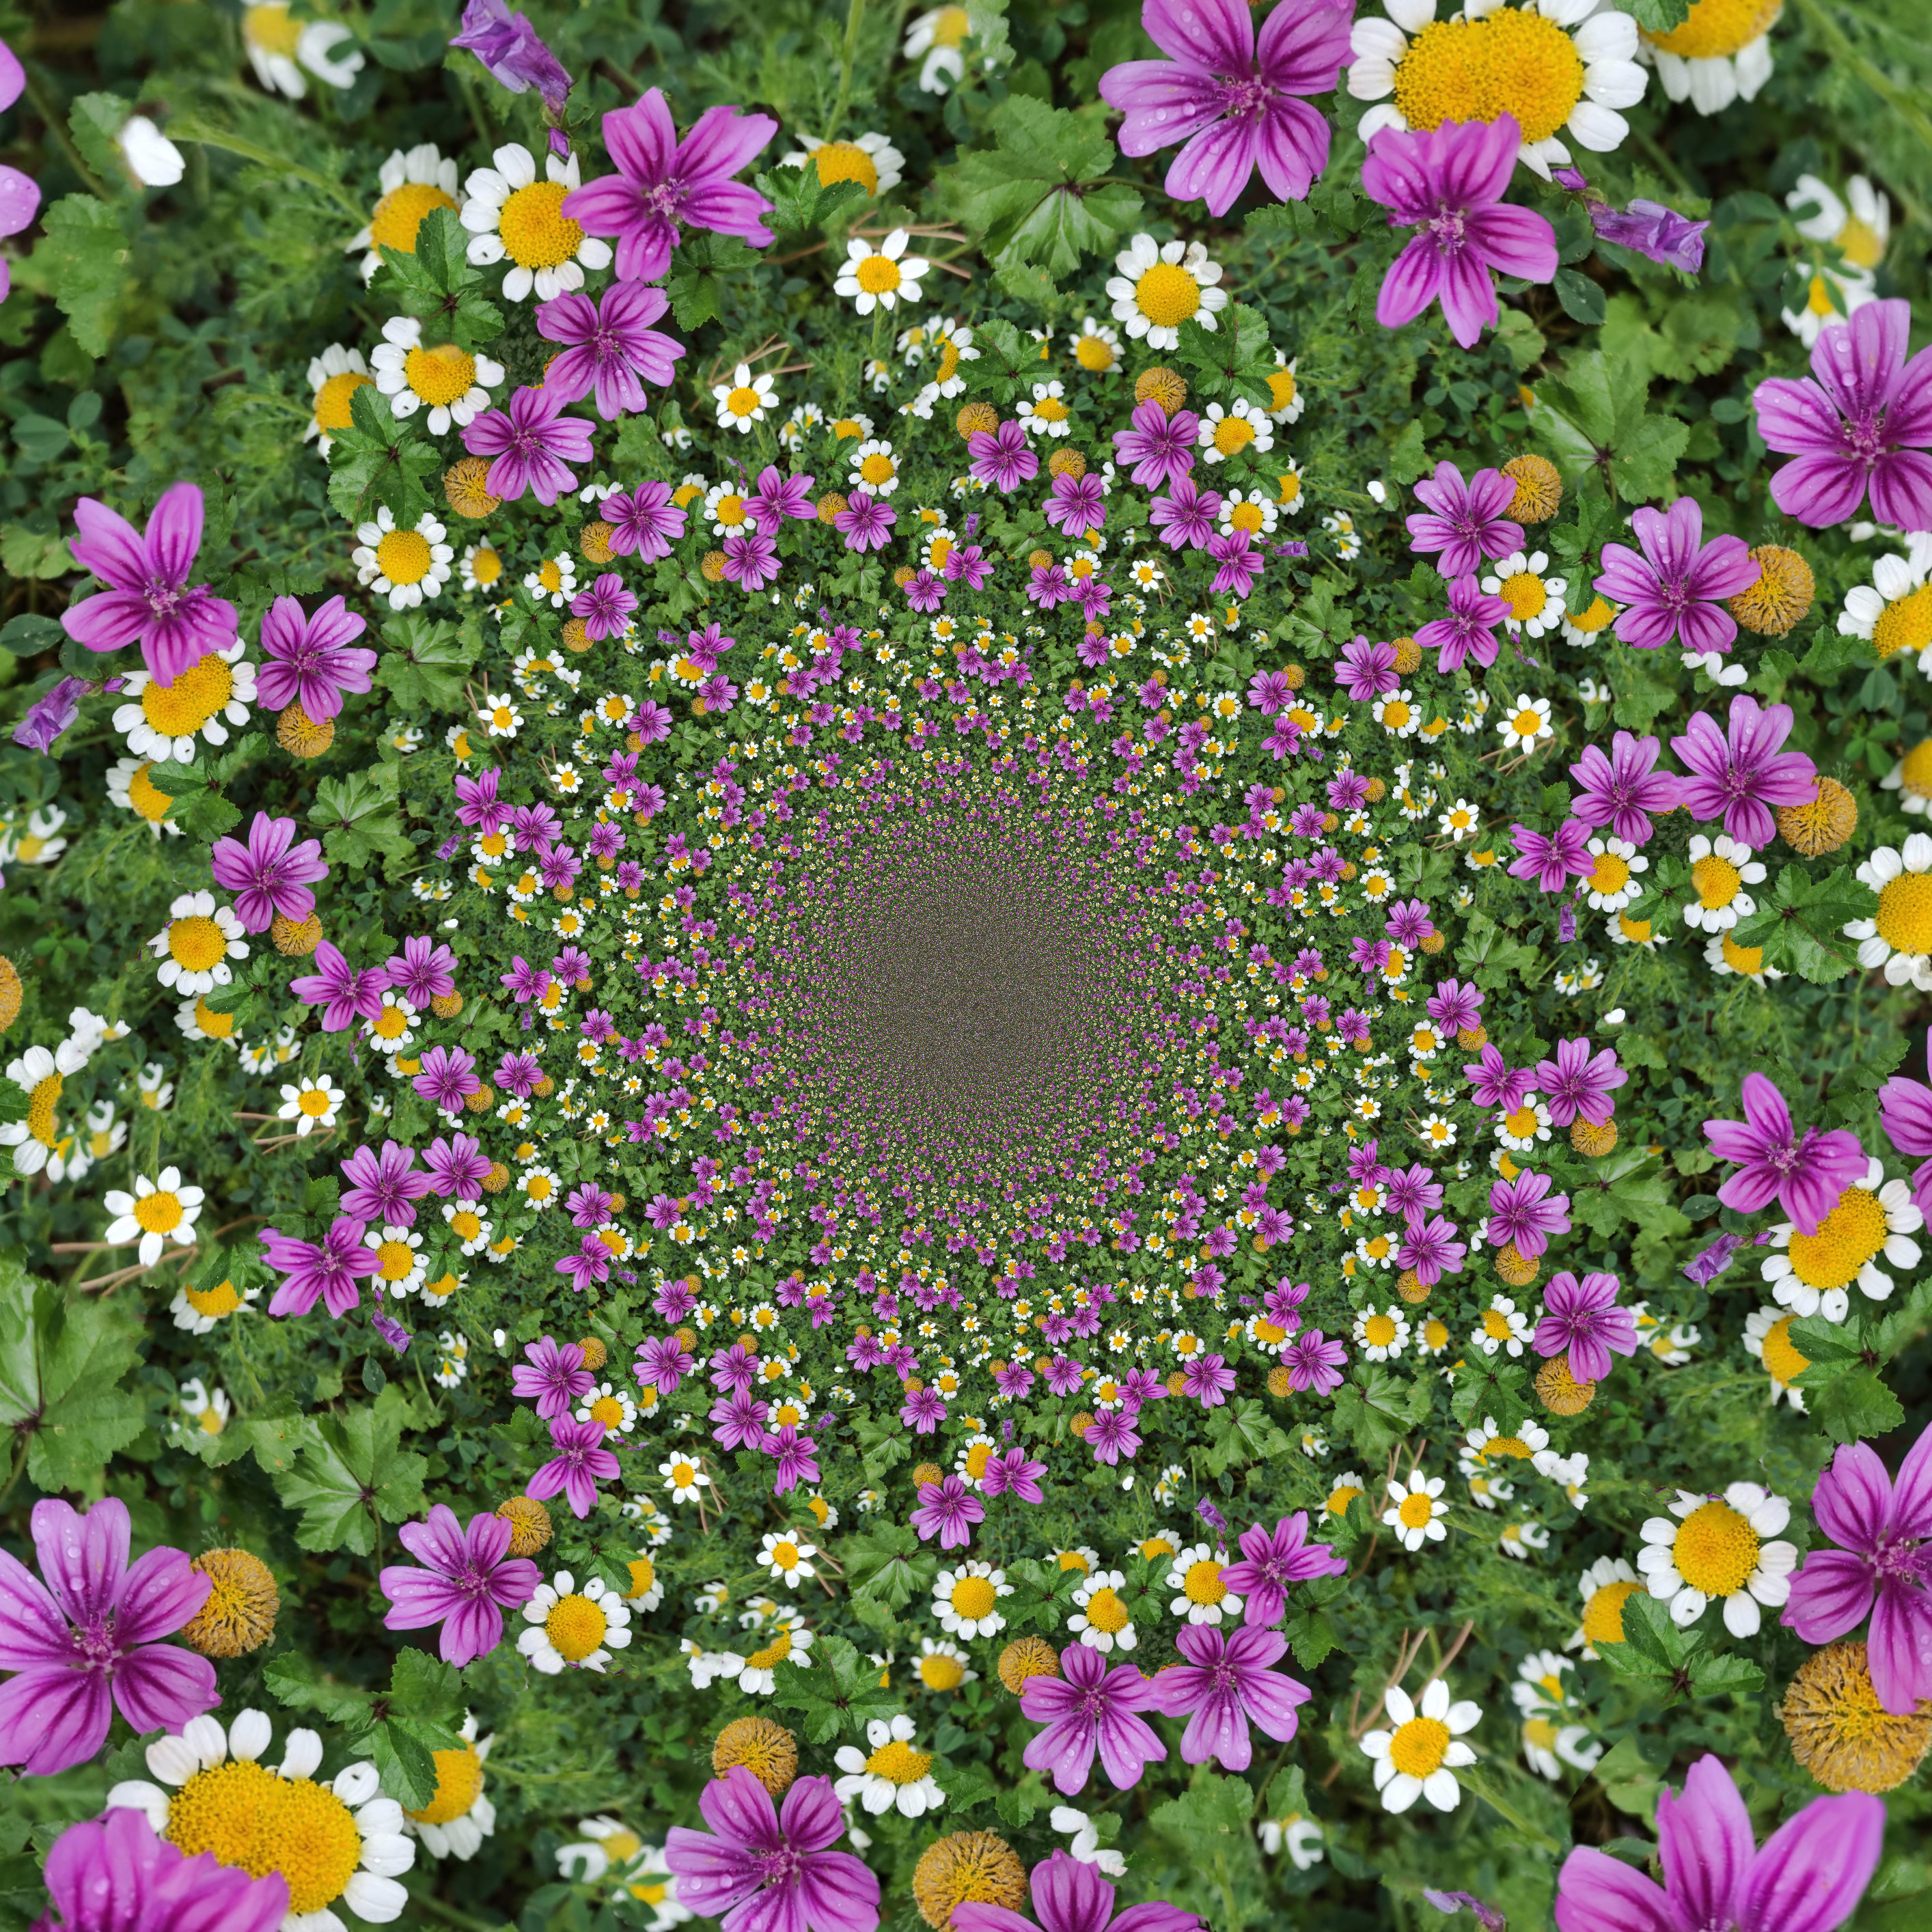 manymoreflowers.jpg